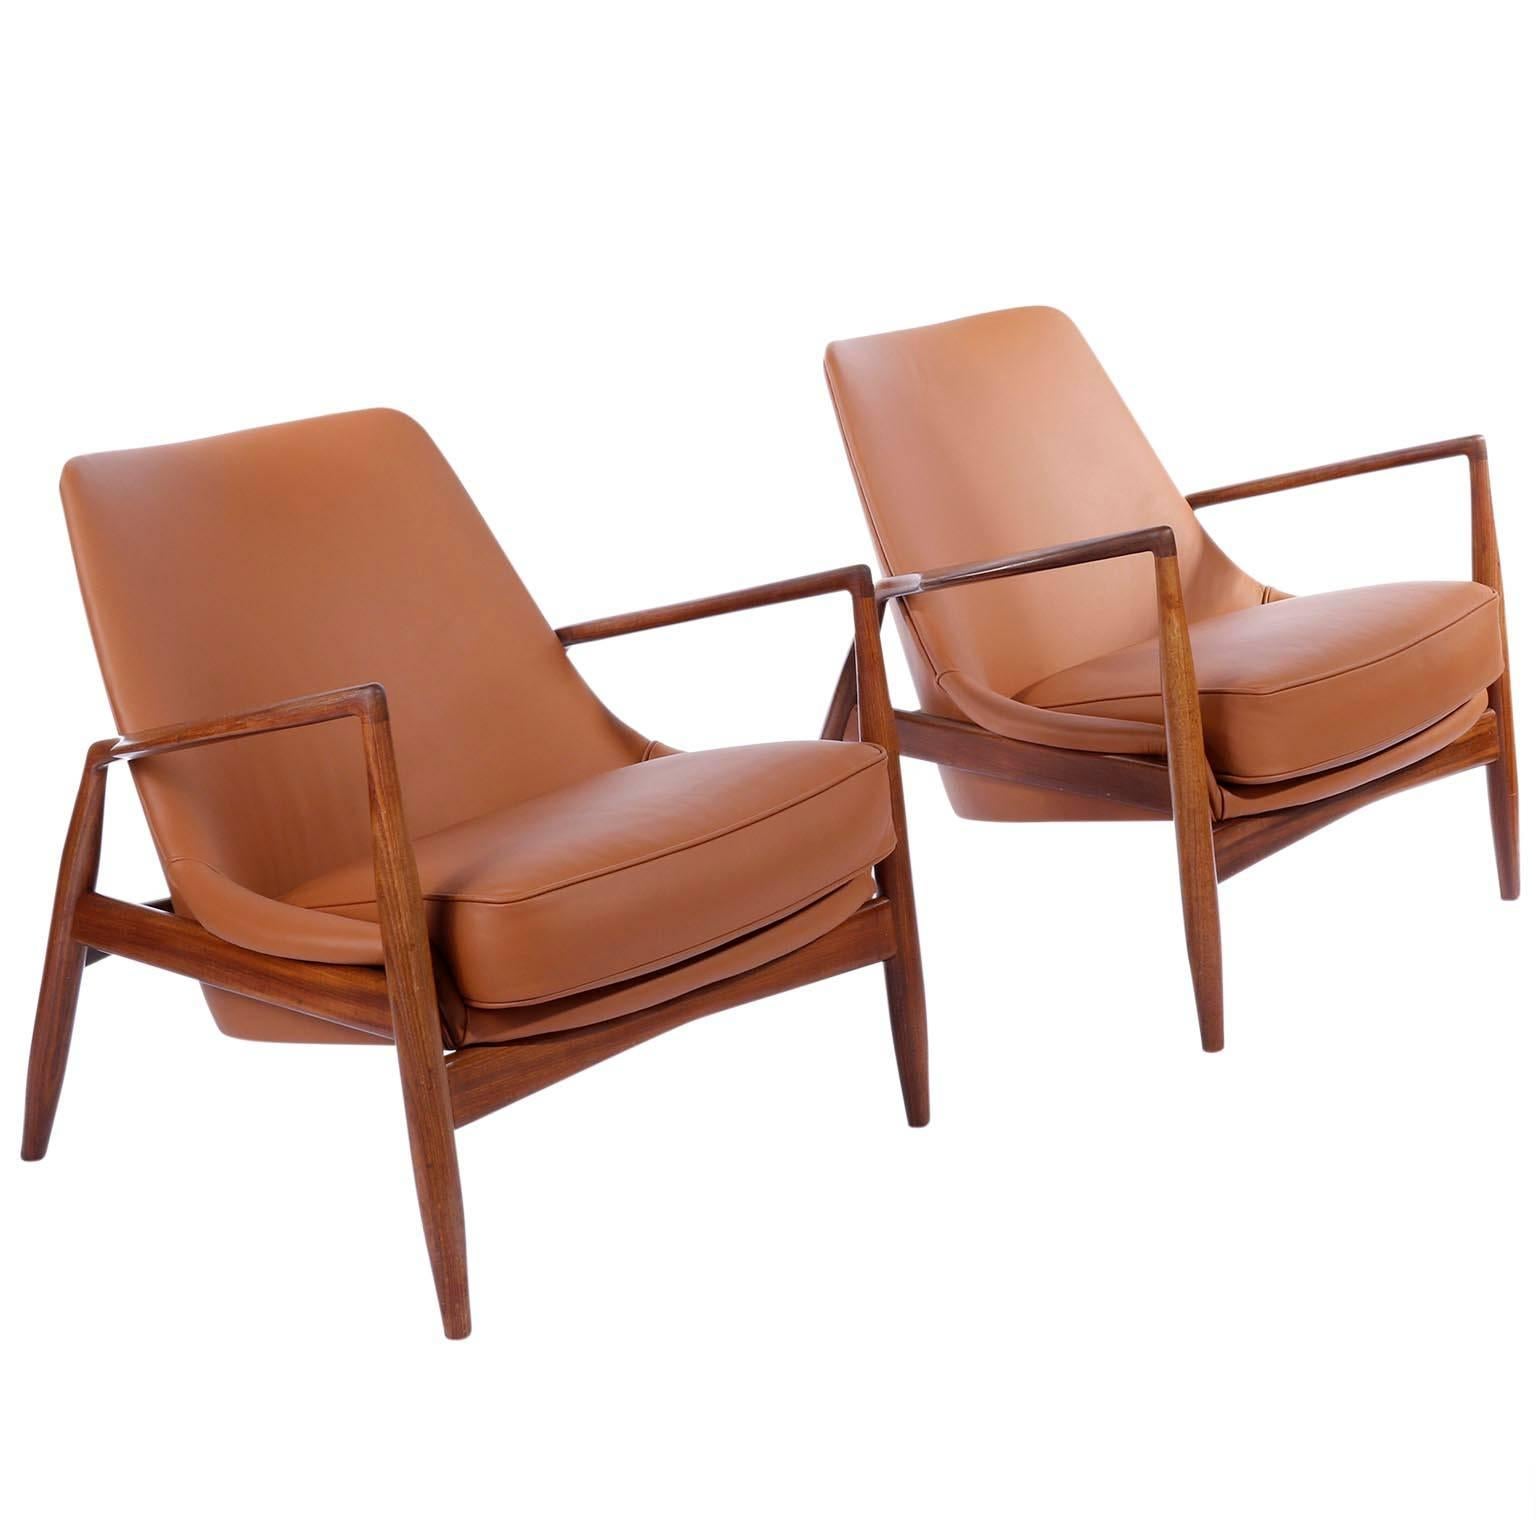 Swedish Ib Kofod-Larsen Pair of Seal Lounge Chairs in Teak Cognac Leather, Sweden, 1956